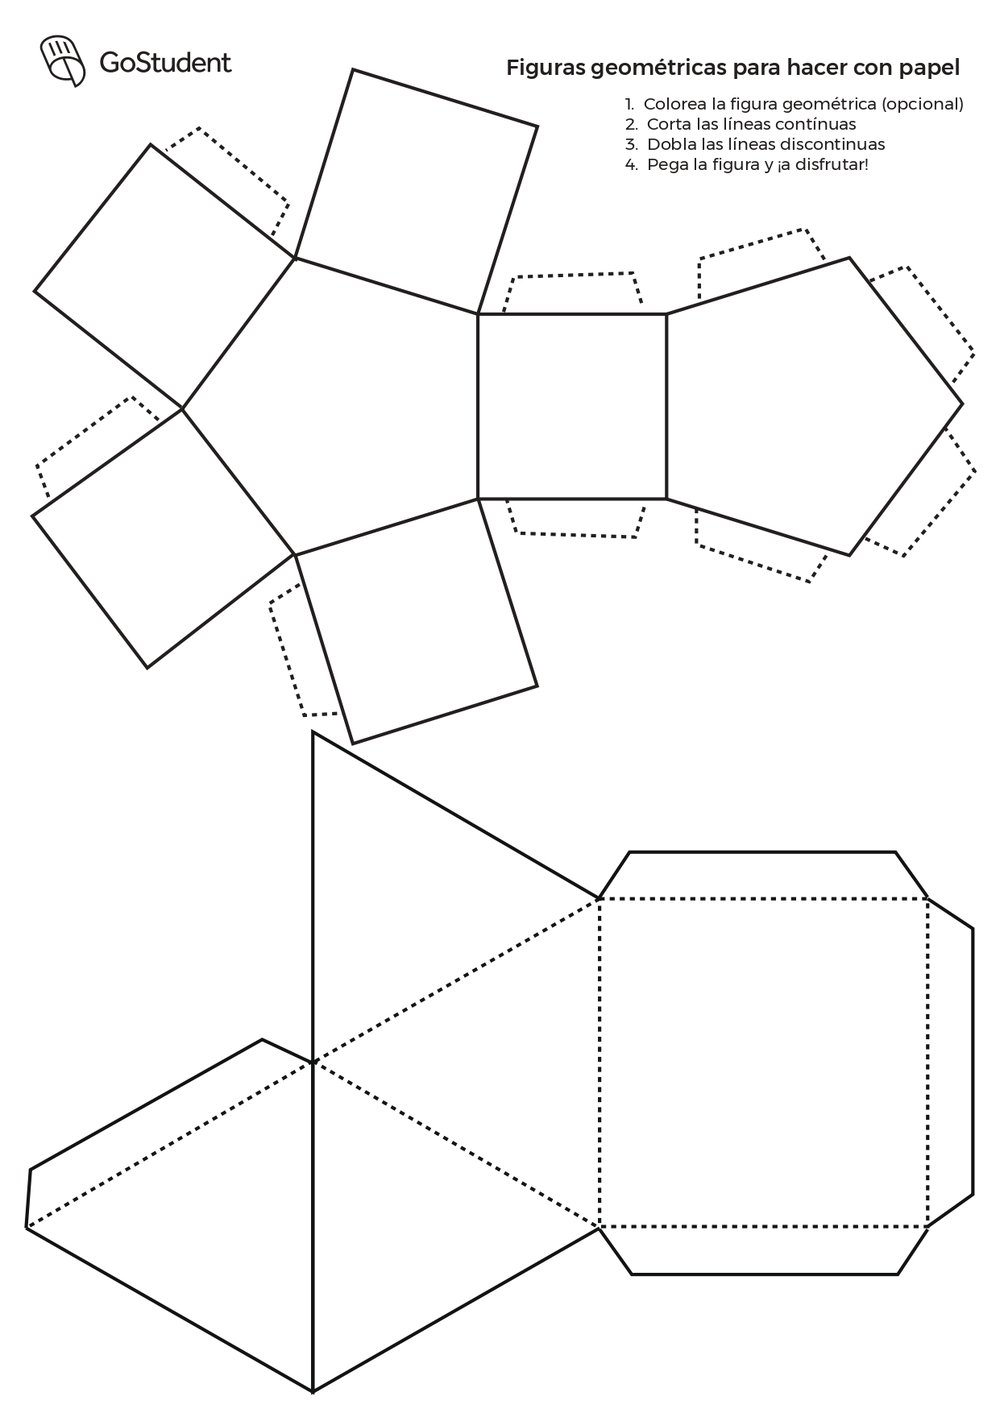 Figuras En 3d Con Papel PDF: Cómo hacer figuras geométricas de papel en 3D | GoStudent